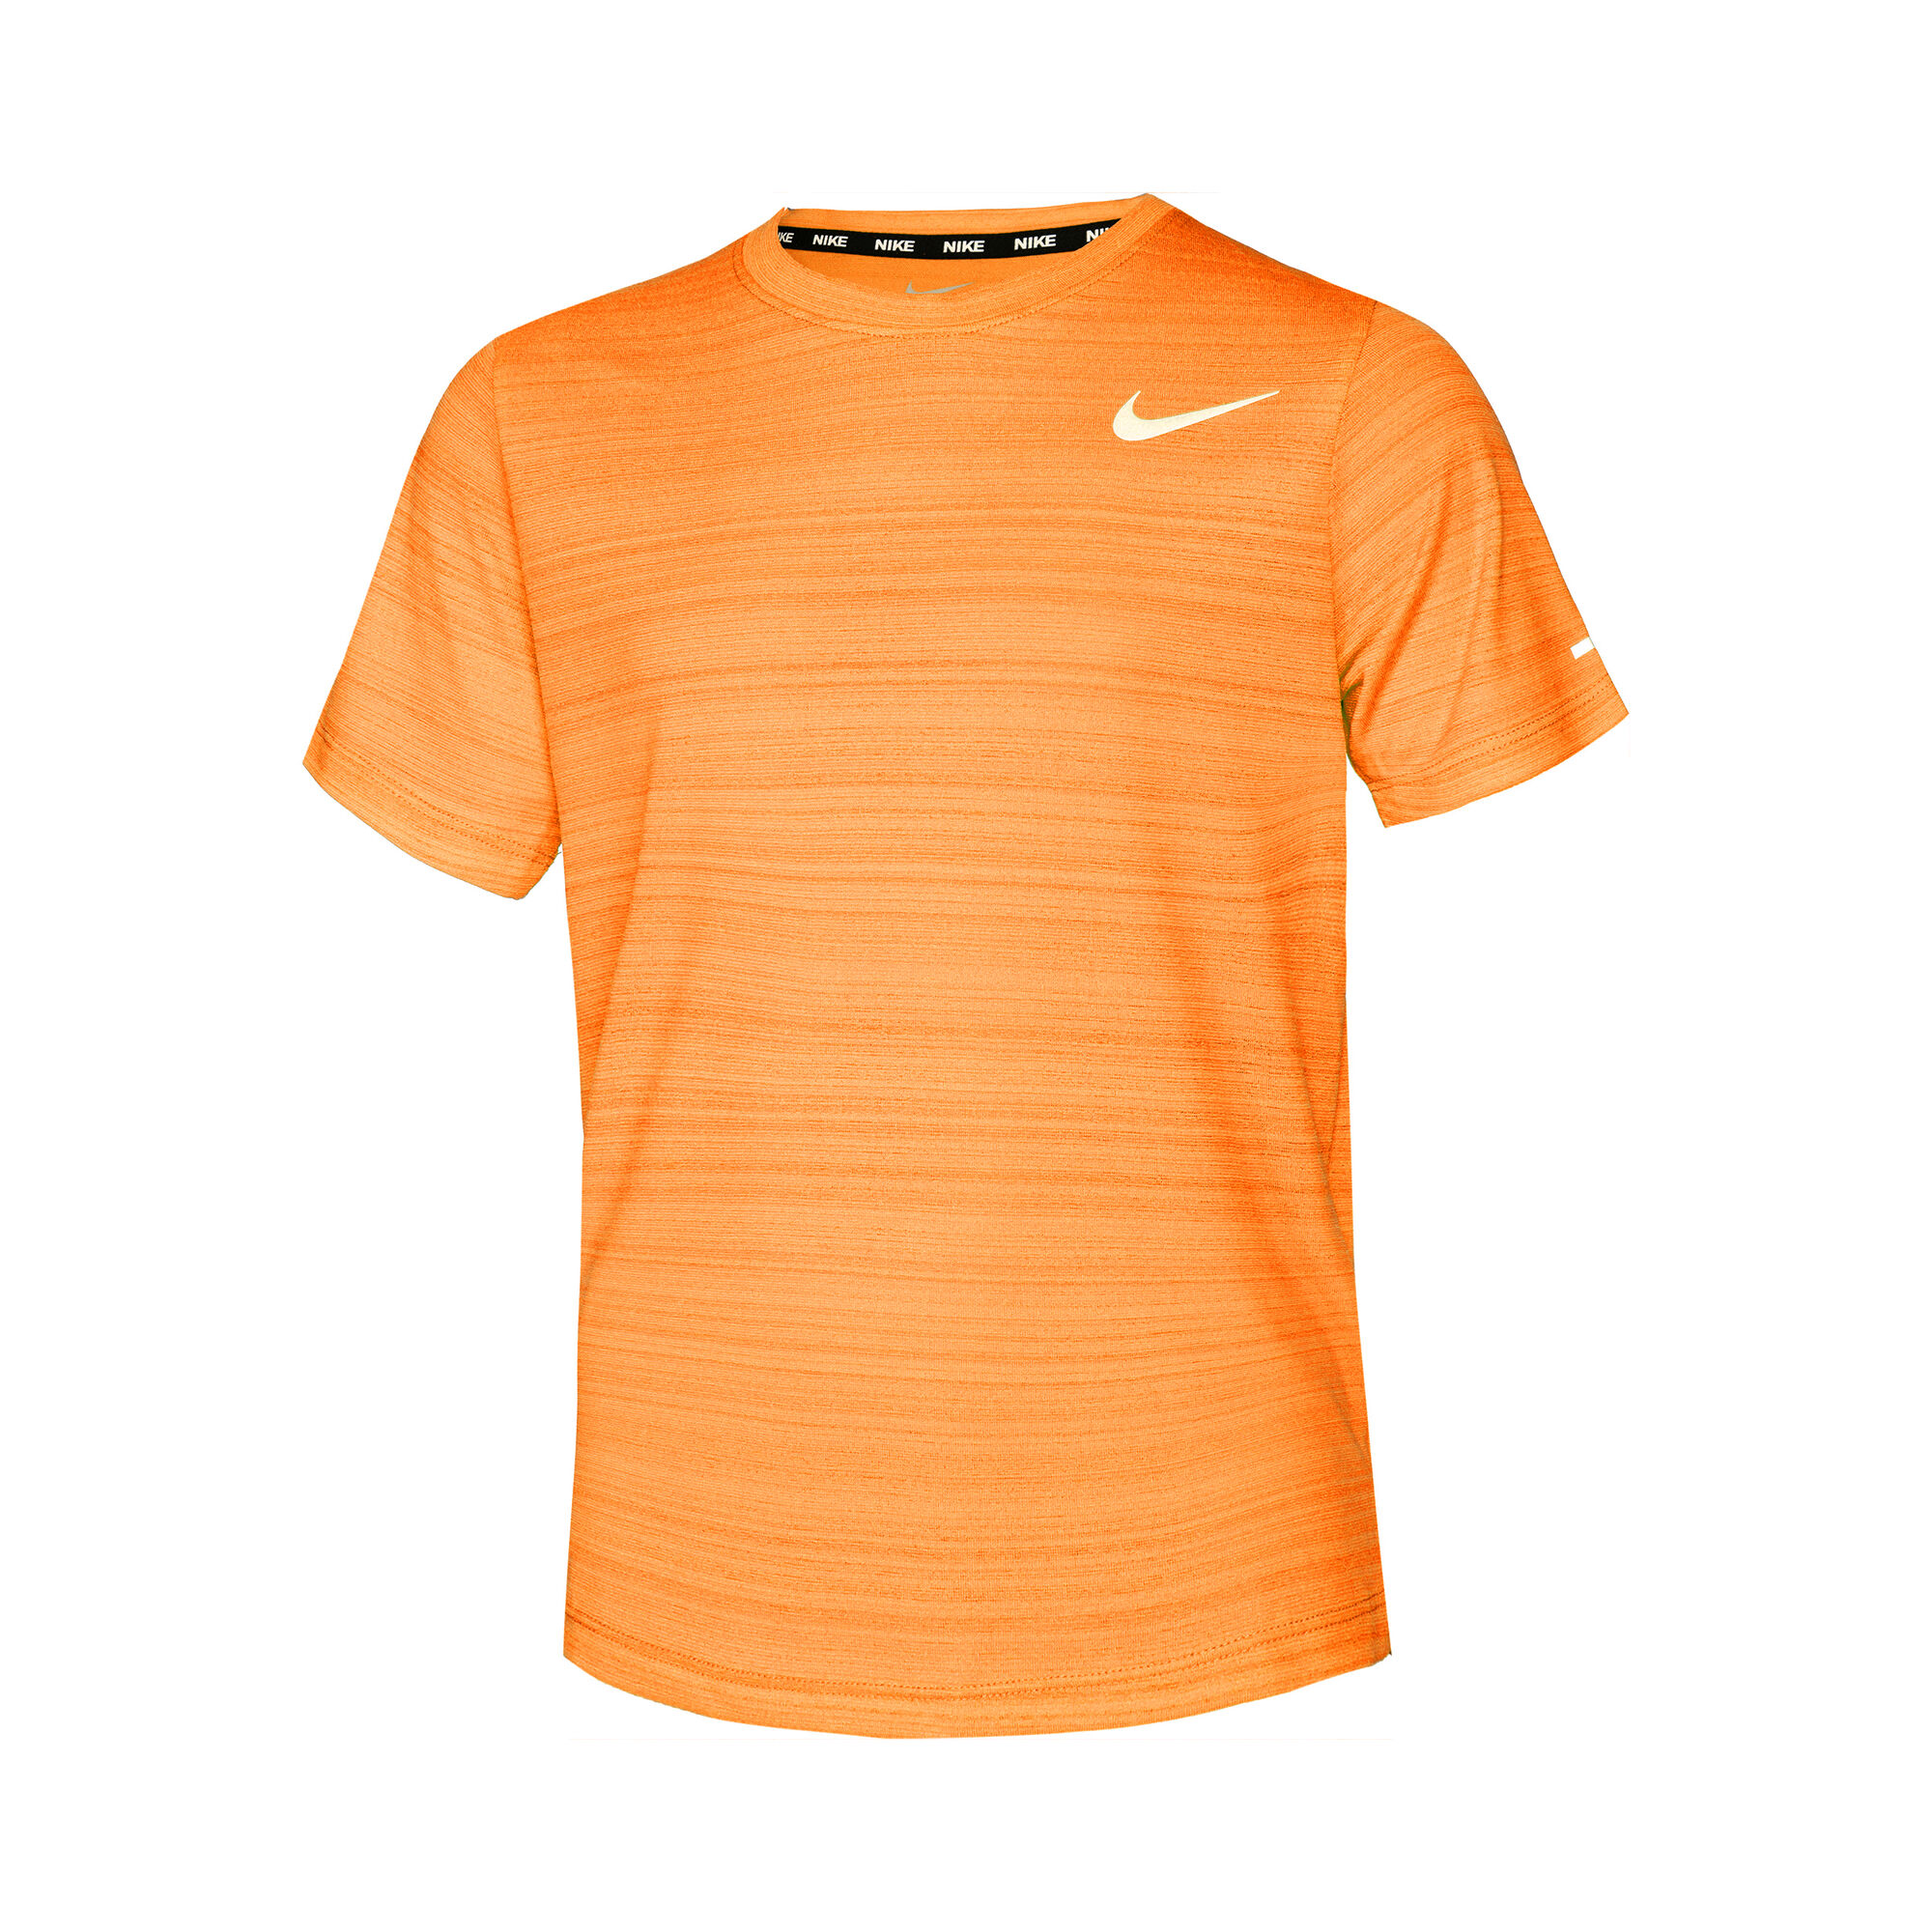 Buy Nike Dri-Fit Miler Running Shirts Boys Orange online